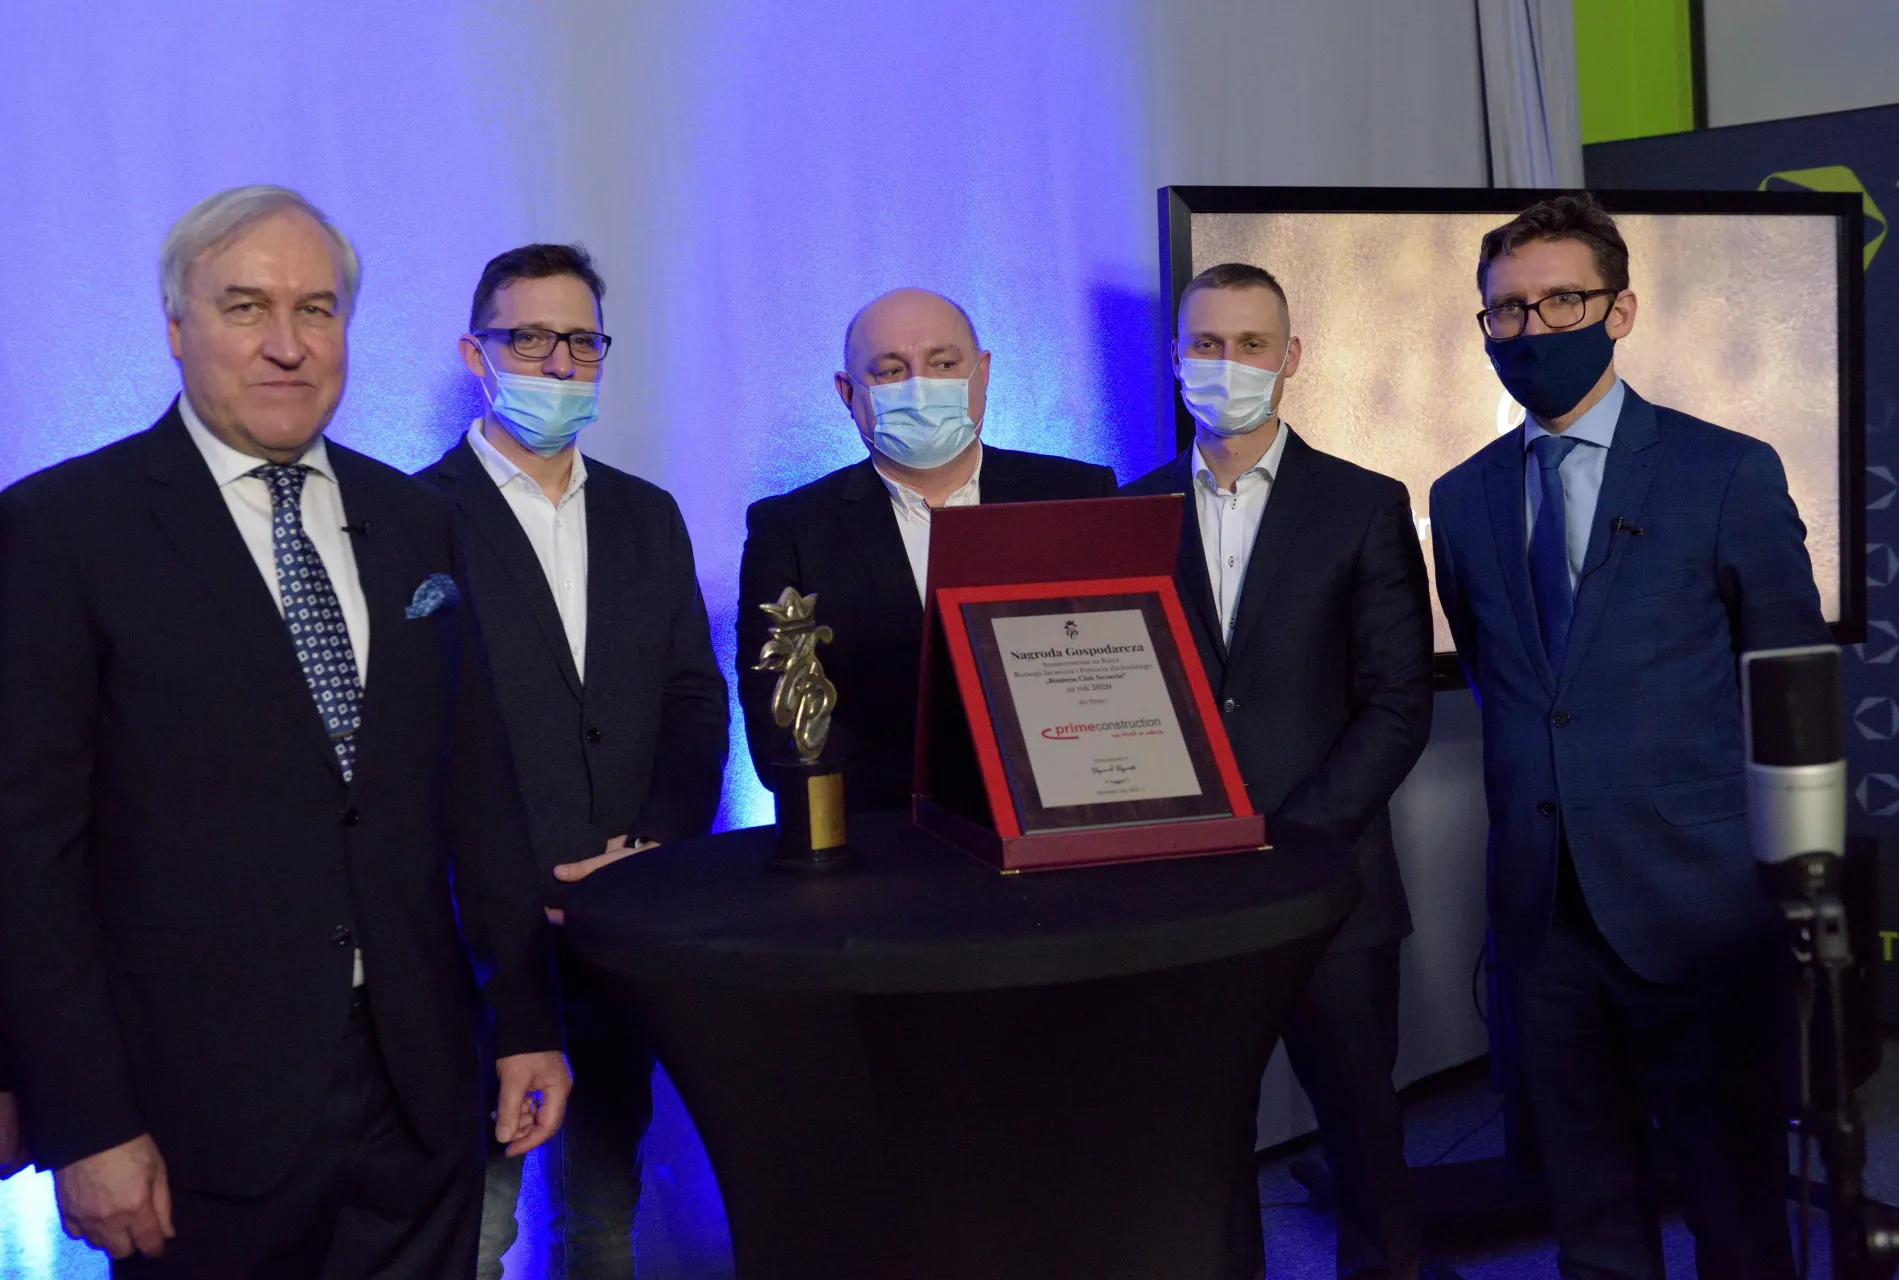 Prime Construction awarded of 2020 THE ECONOMIC AWARDS by Business Club Szczecin